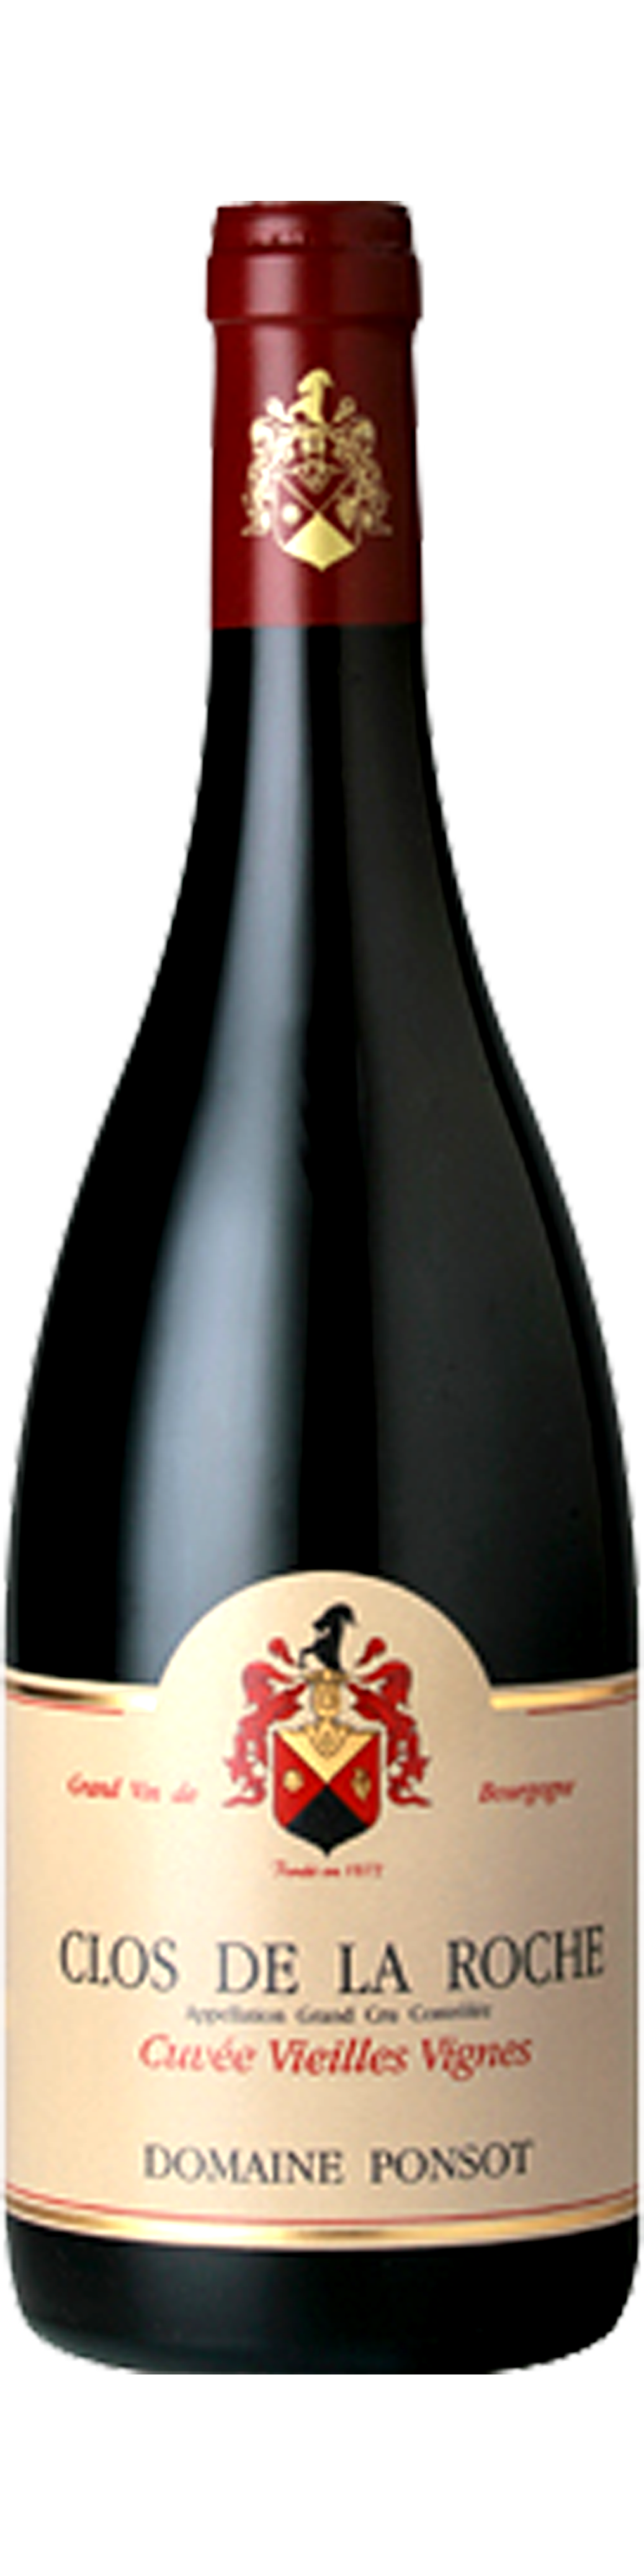 Image of product Clos de la Roche Vieilles Vignes Grand Cru